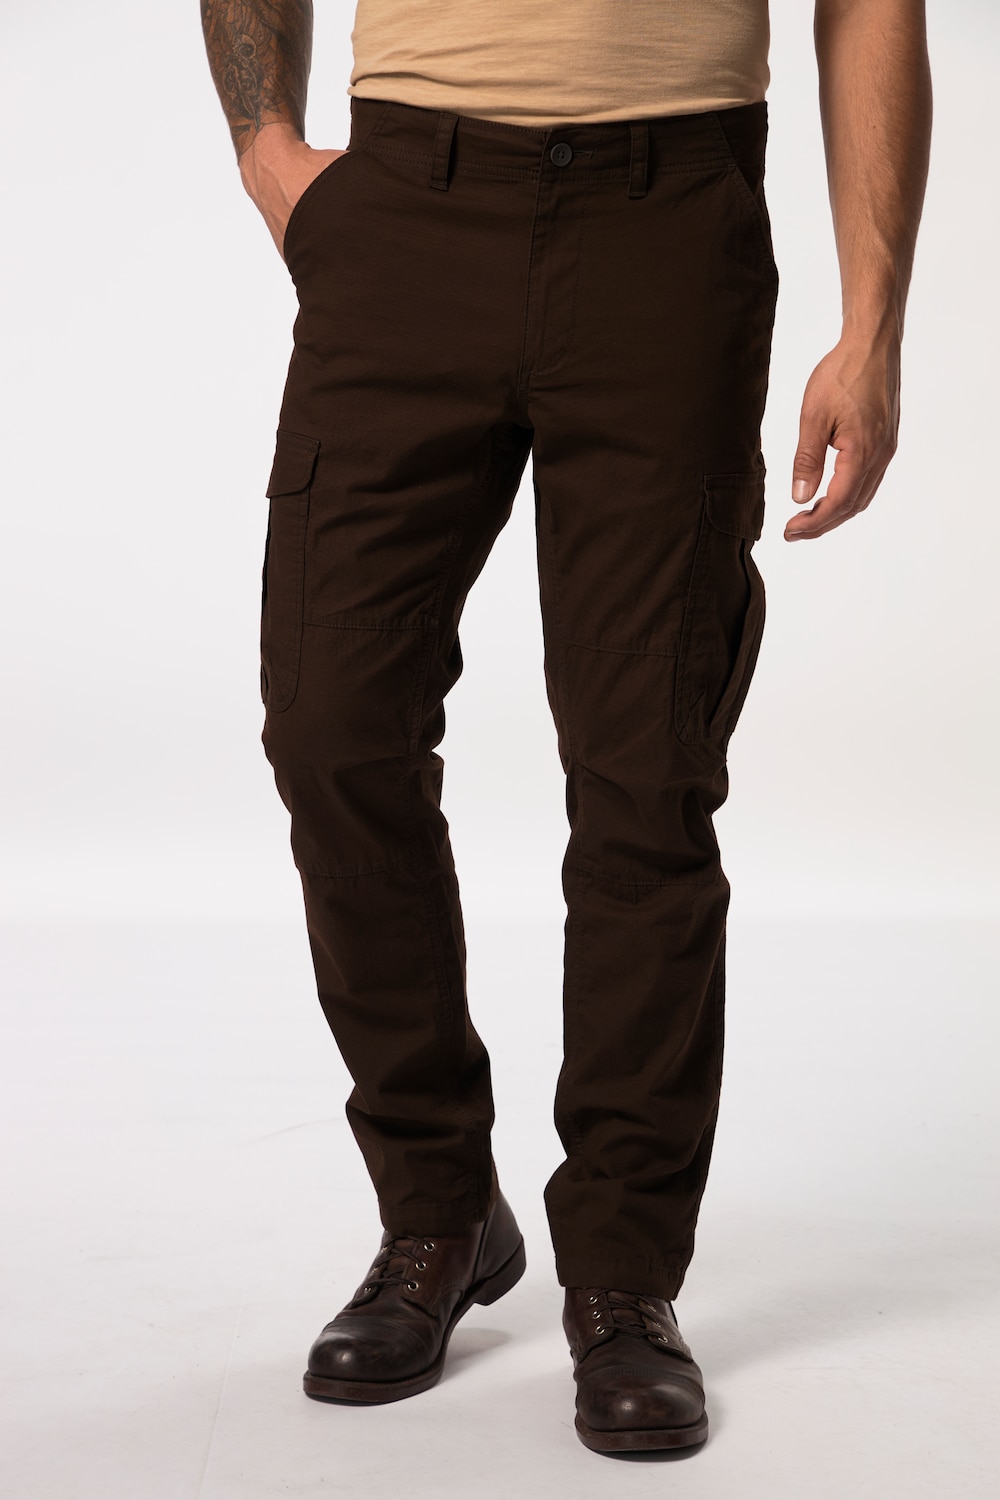 grandes tailles pantalon cargo flexnamic® en ripstop, hommes, marron, taille: 68, coton, jp1880